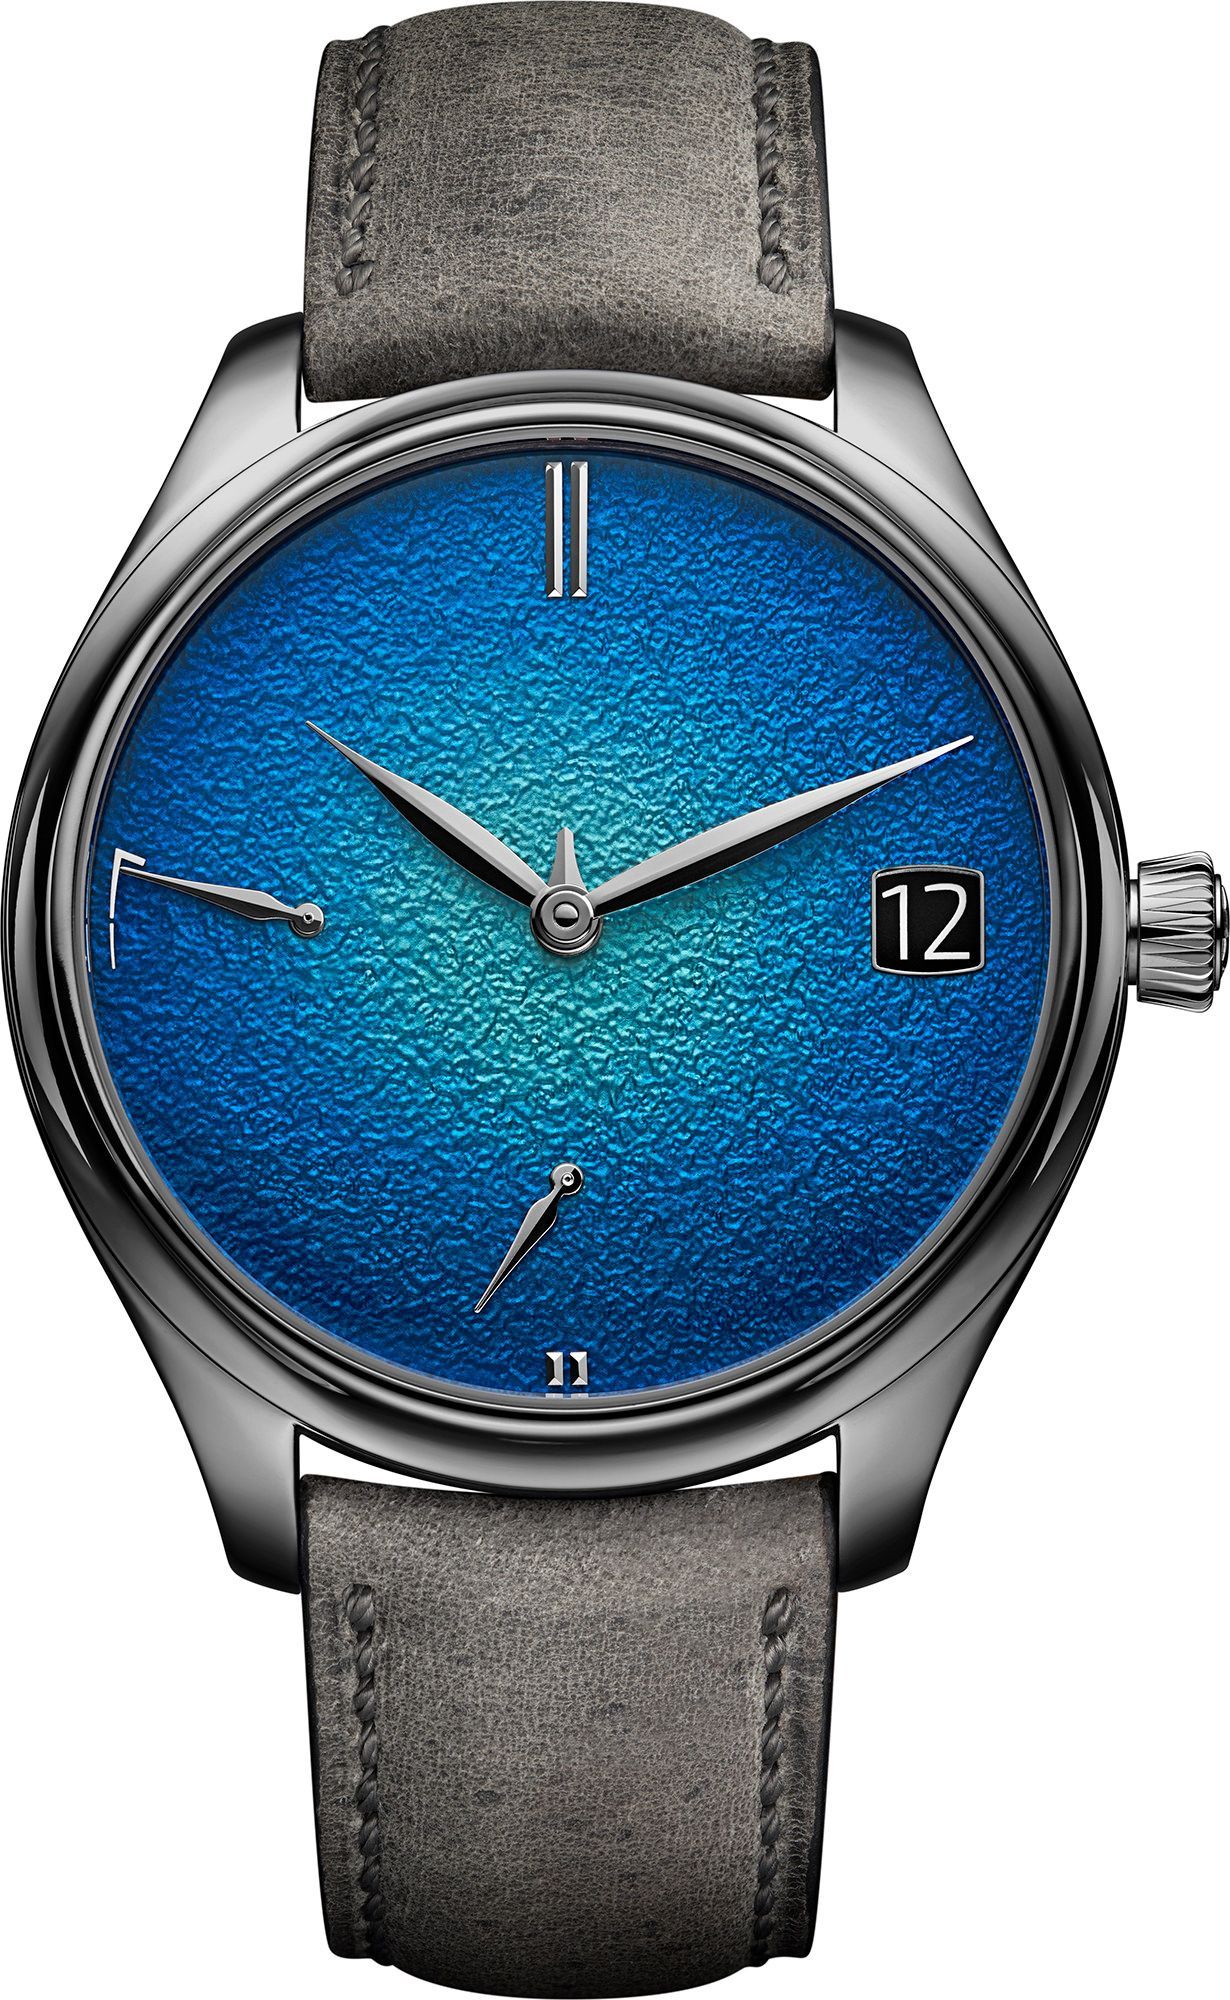 H. Moser & Cie. Perpetual Calendar 42 mm Watch in Blue Dial For Men - 1